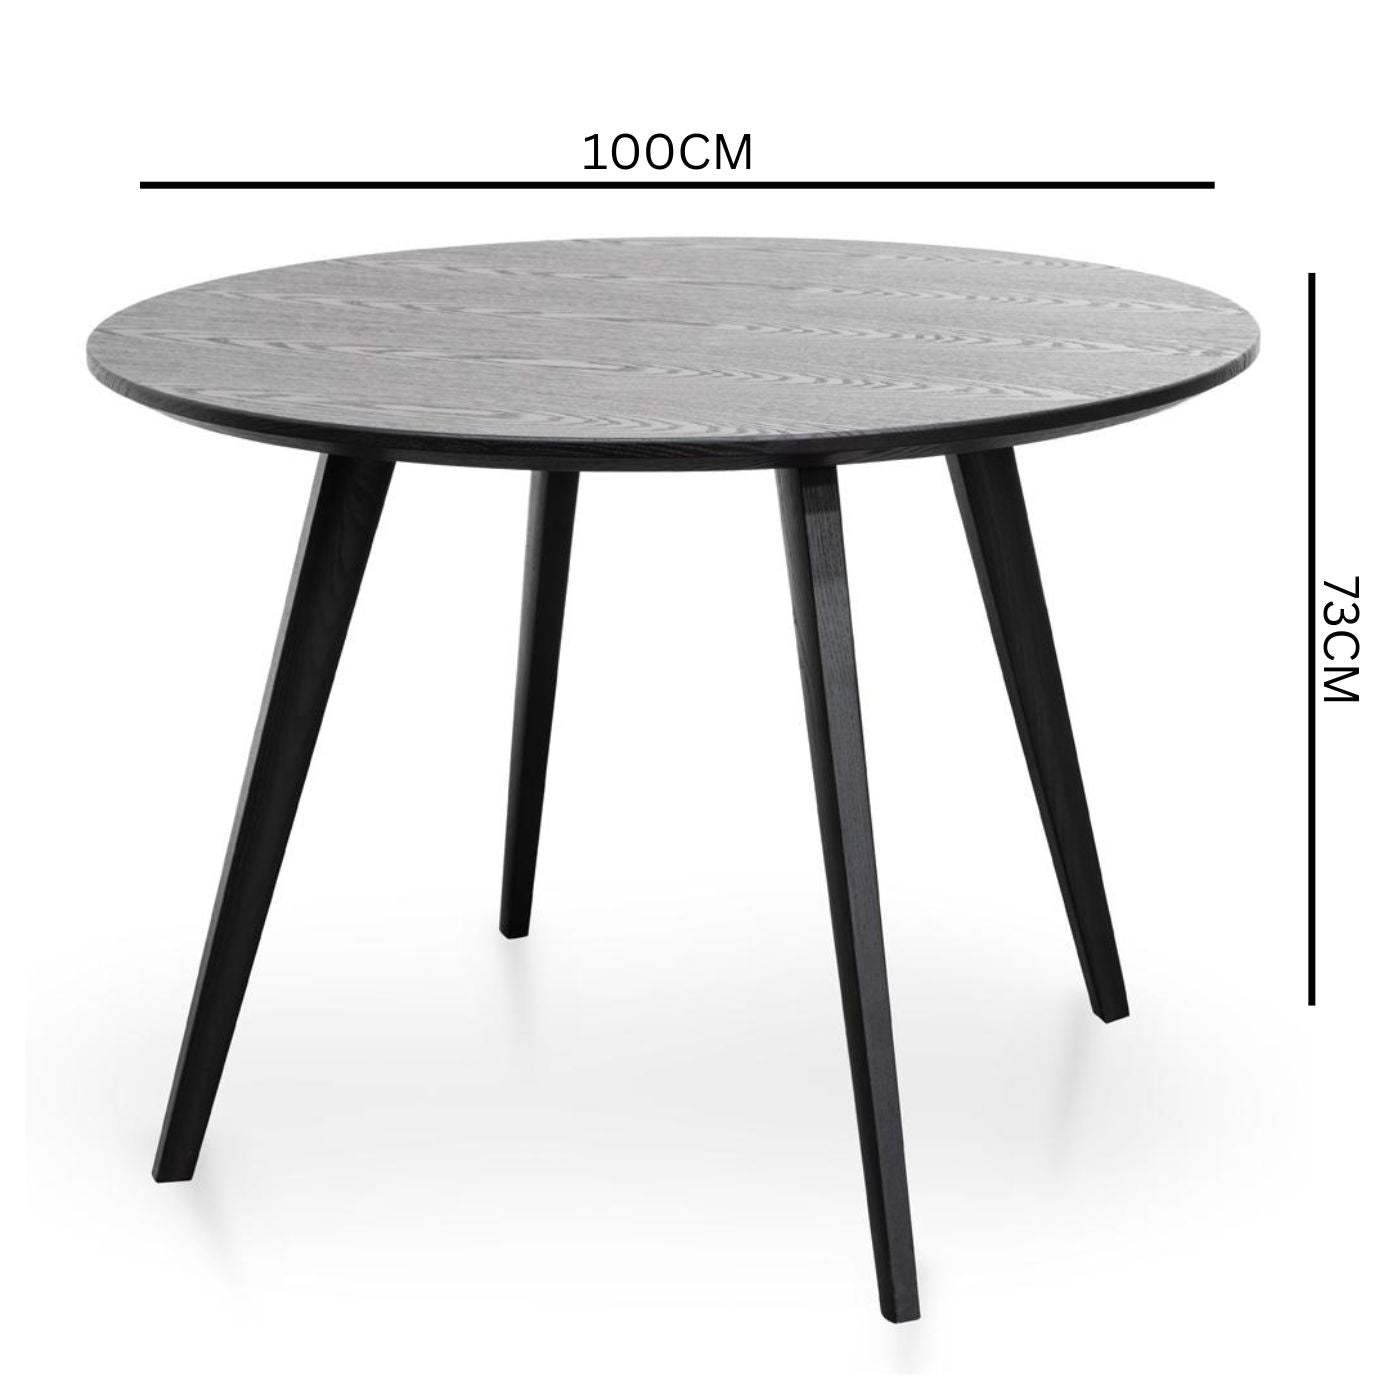 Smith 100cm Veneer Top Round Dining Table - Full Black